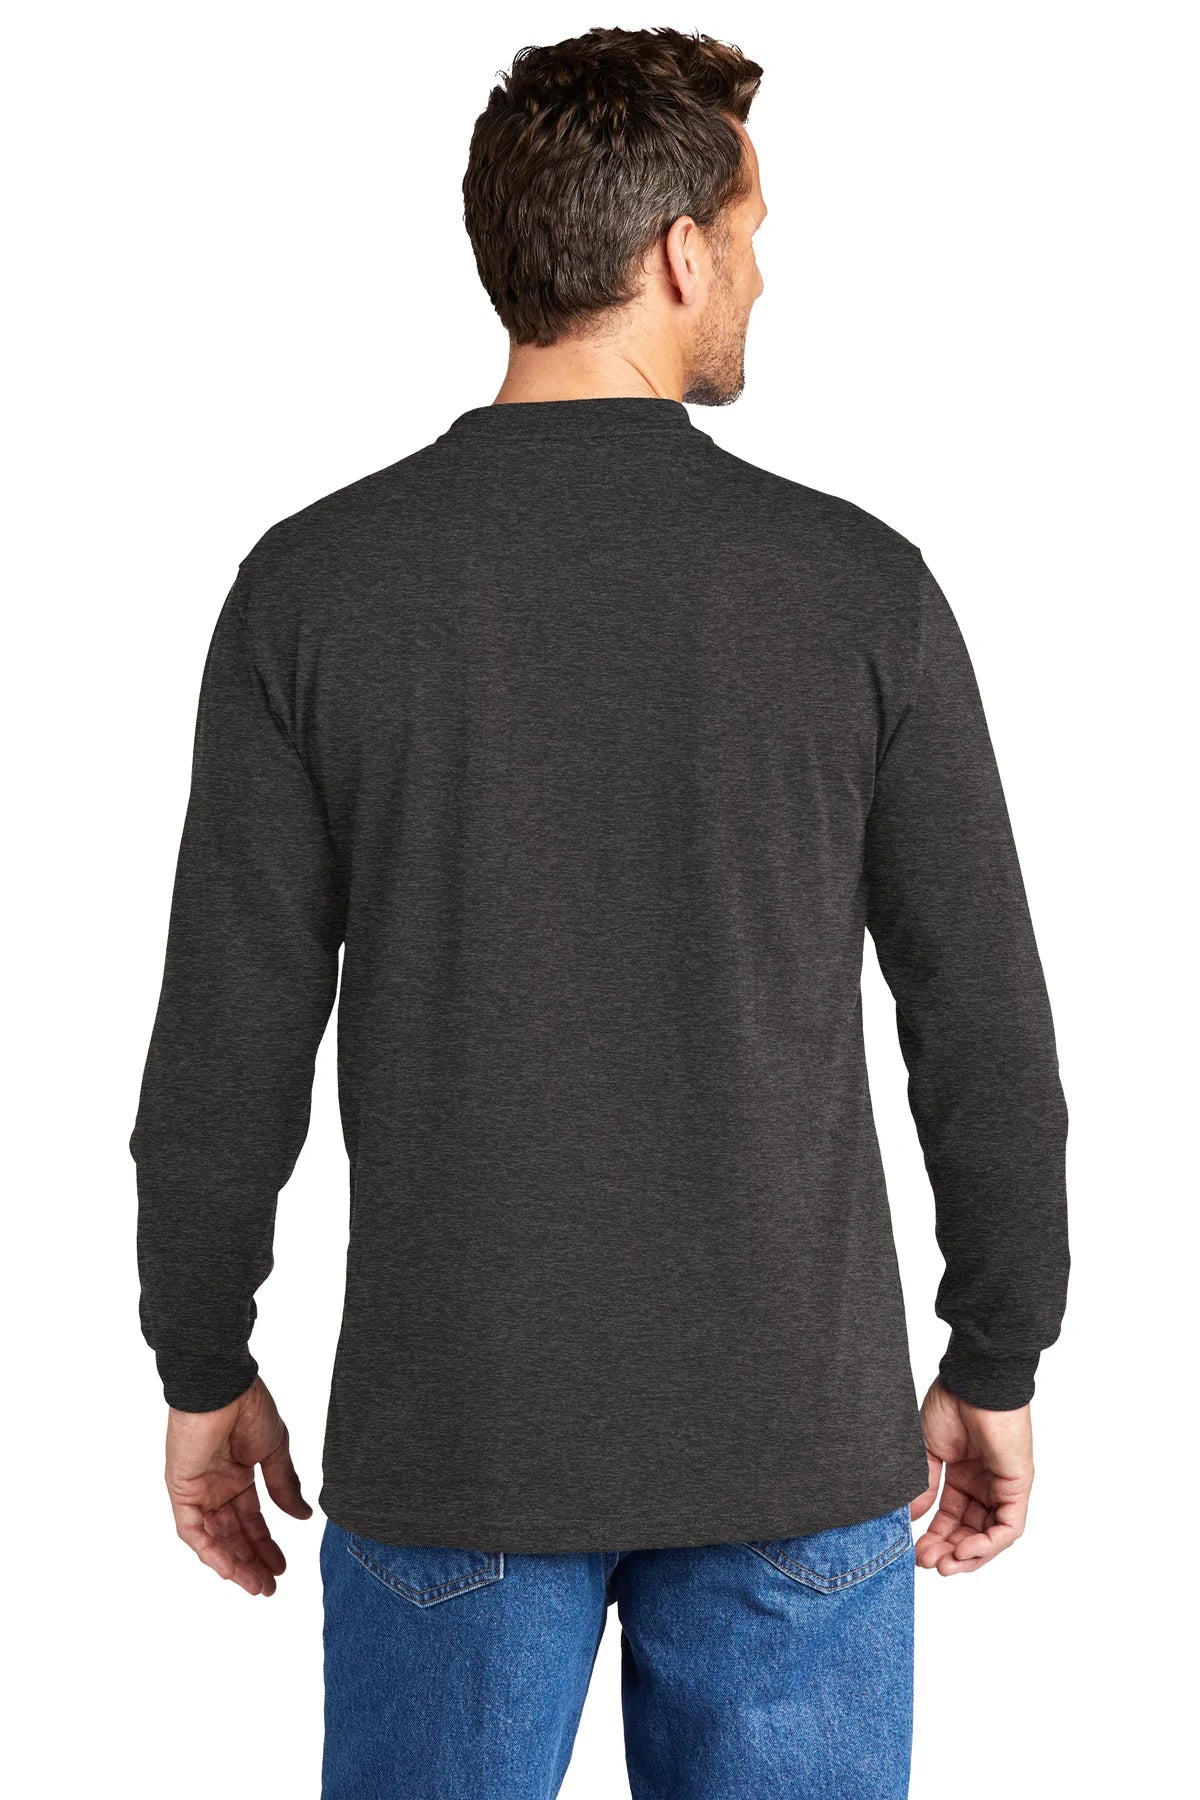 Carhartt Long Sleeve Henley Custom T-Shirts, Carbon Heather